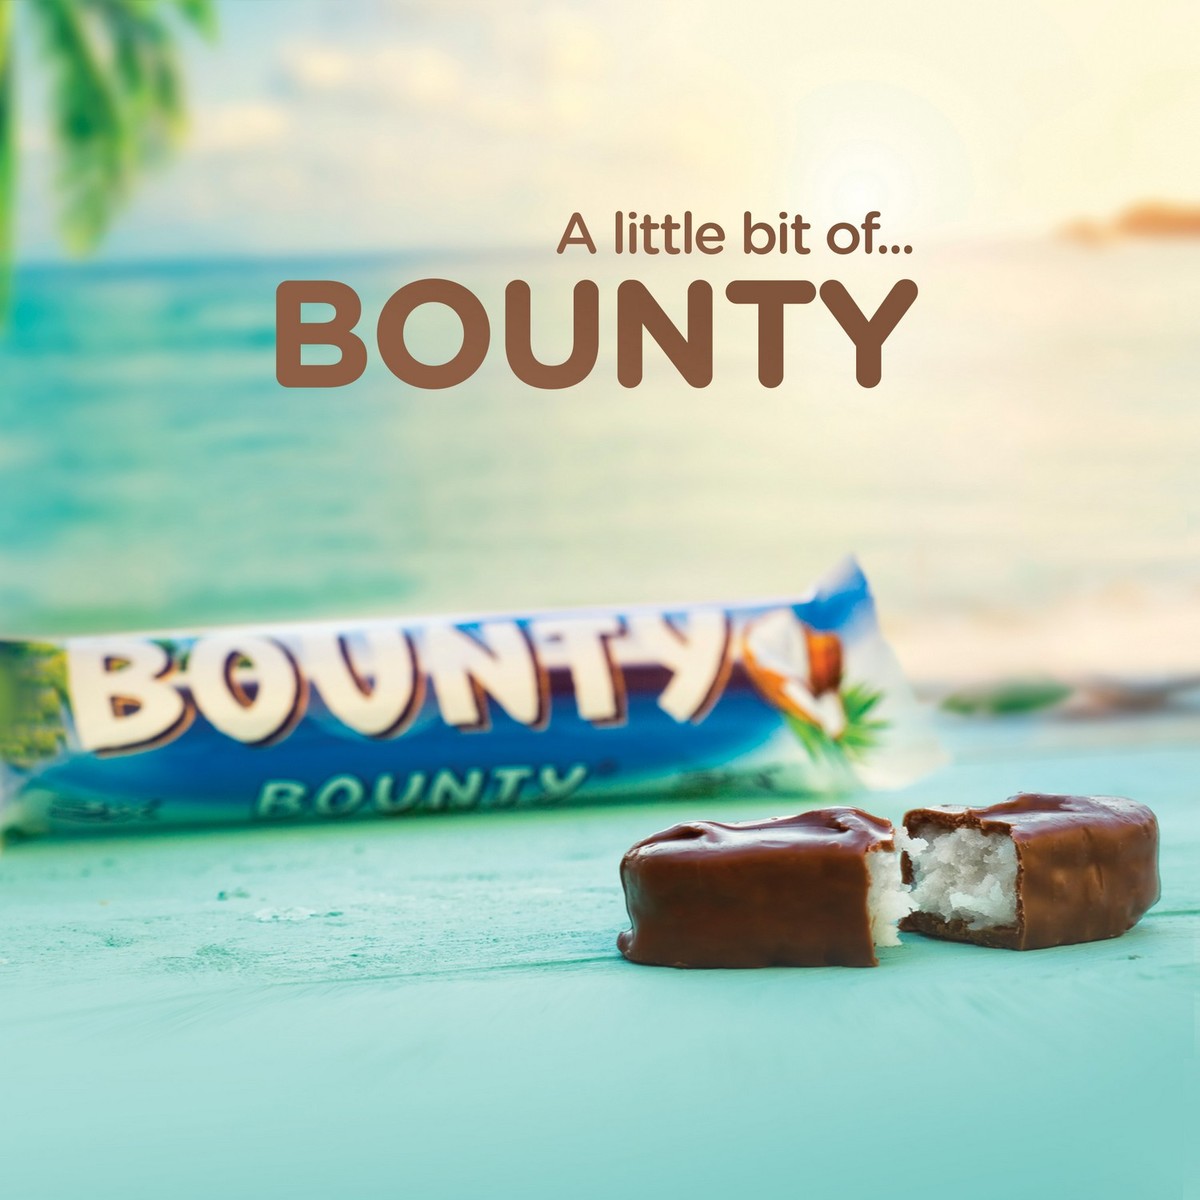 Баунти на английском. Шоколадка Баунти дзен. Реклама Баунти. Реклама шоколада Баунти. Баунти рисунок.